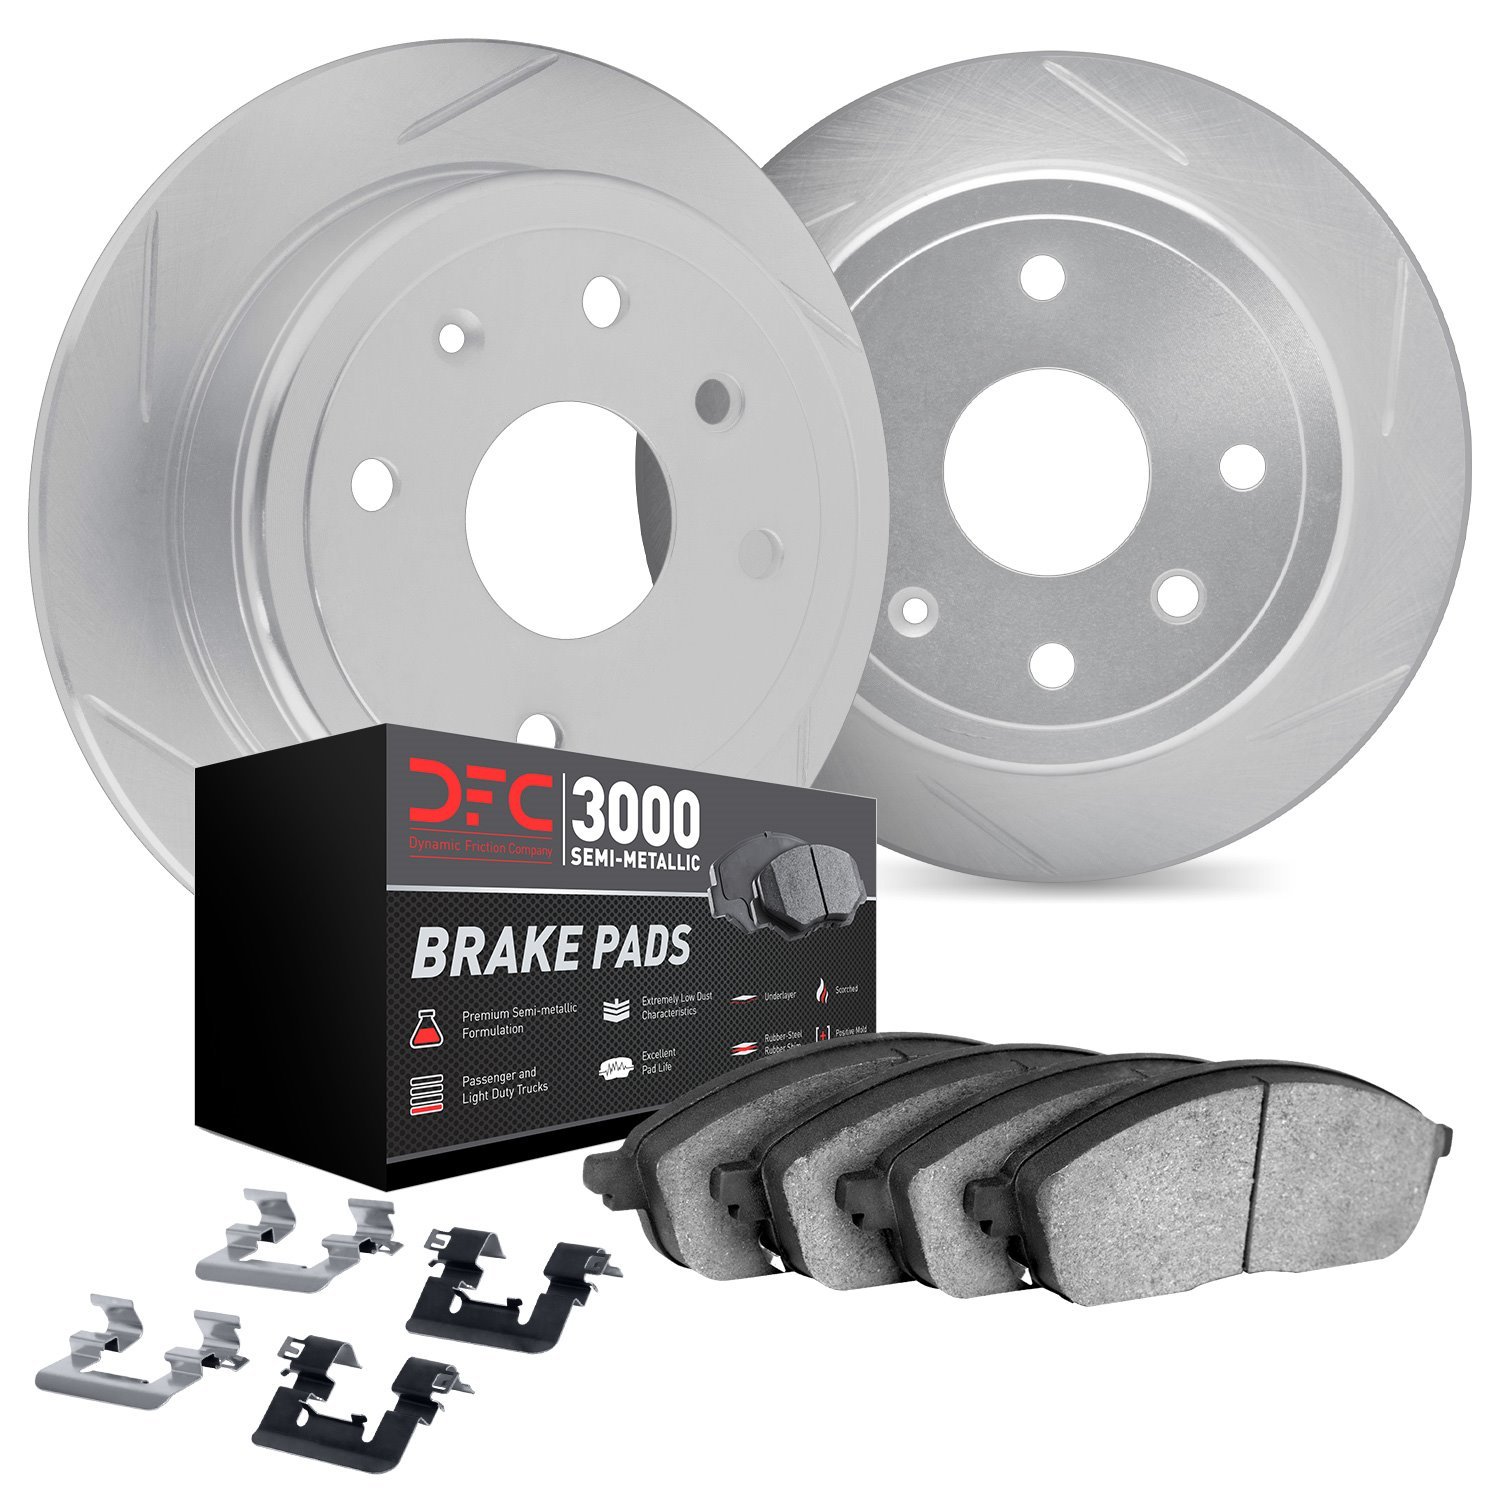 5112-73080 Slotted Brake Rotors with 3000-Series Semi-Metallic Brake Pads Kit & Hardware [Silver], Fits Select Audi/Volkswagen,